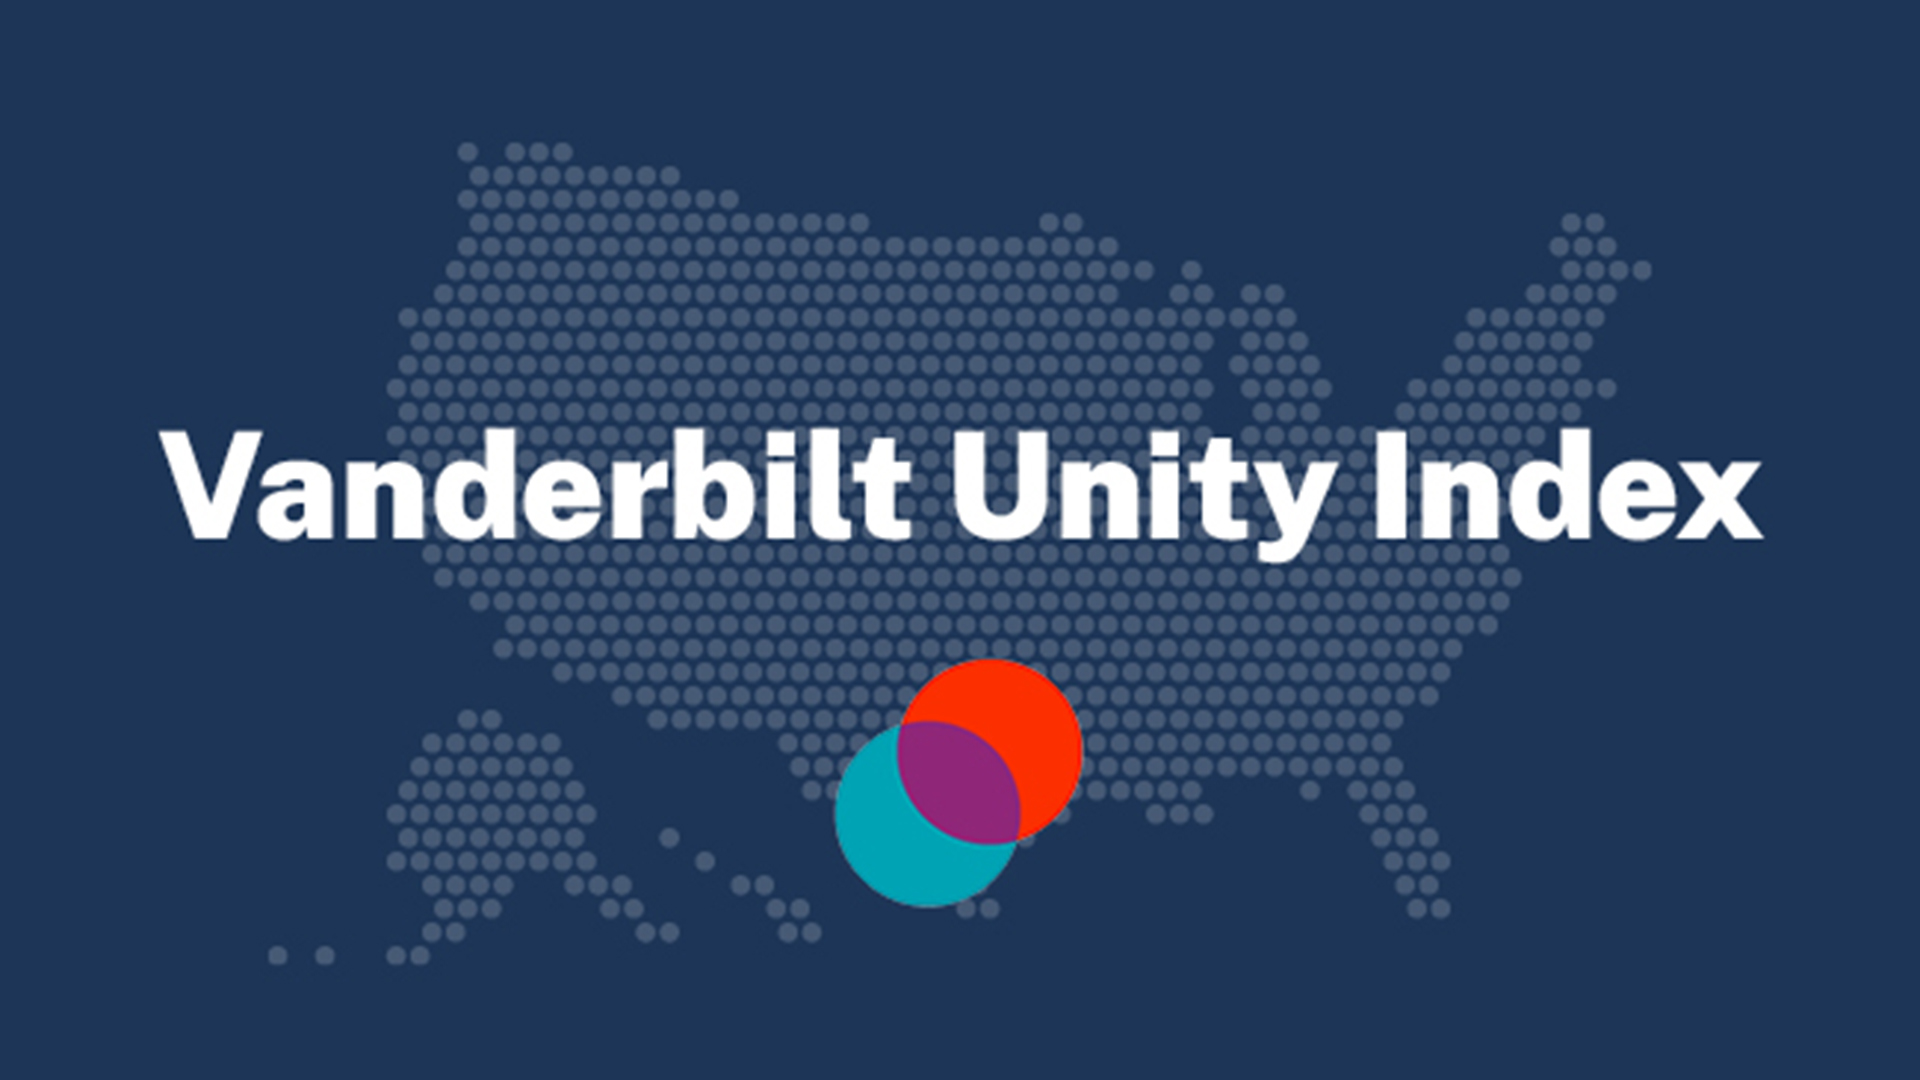 Vanderbilt Unity Index shows American political ‘unity’ stabilized